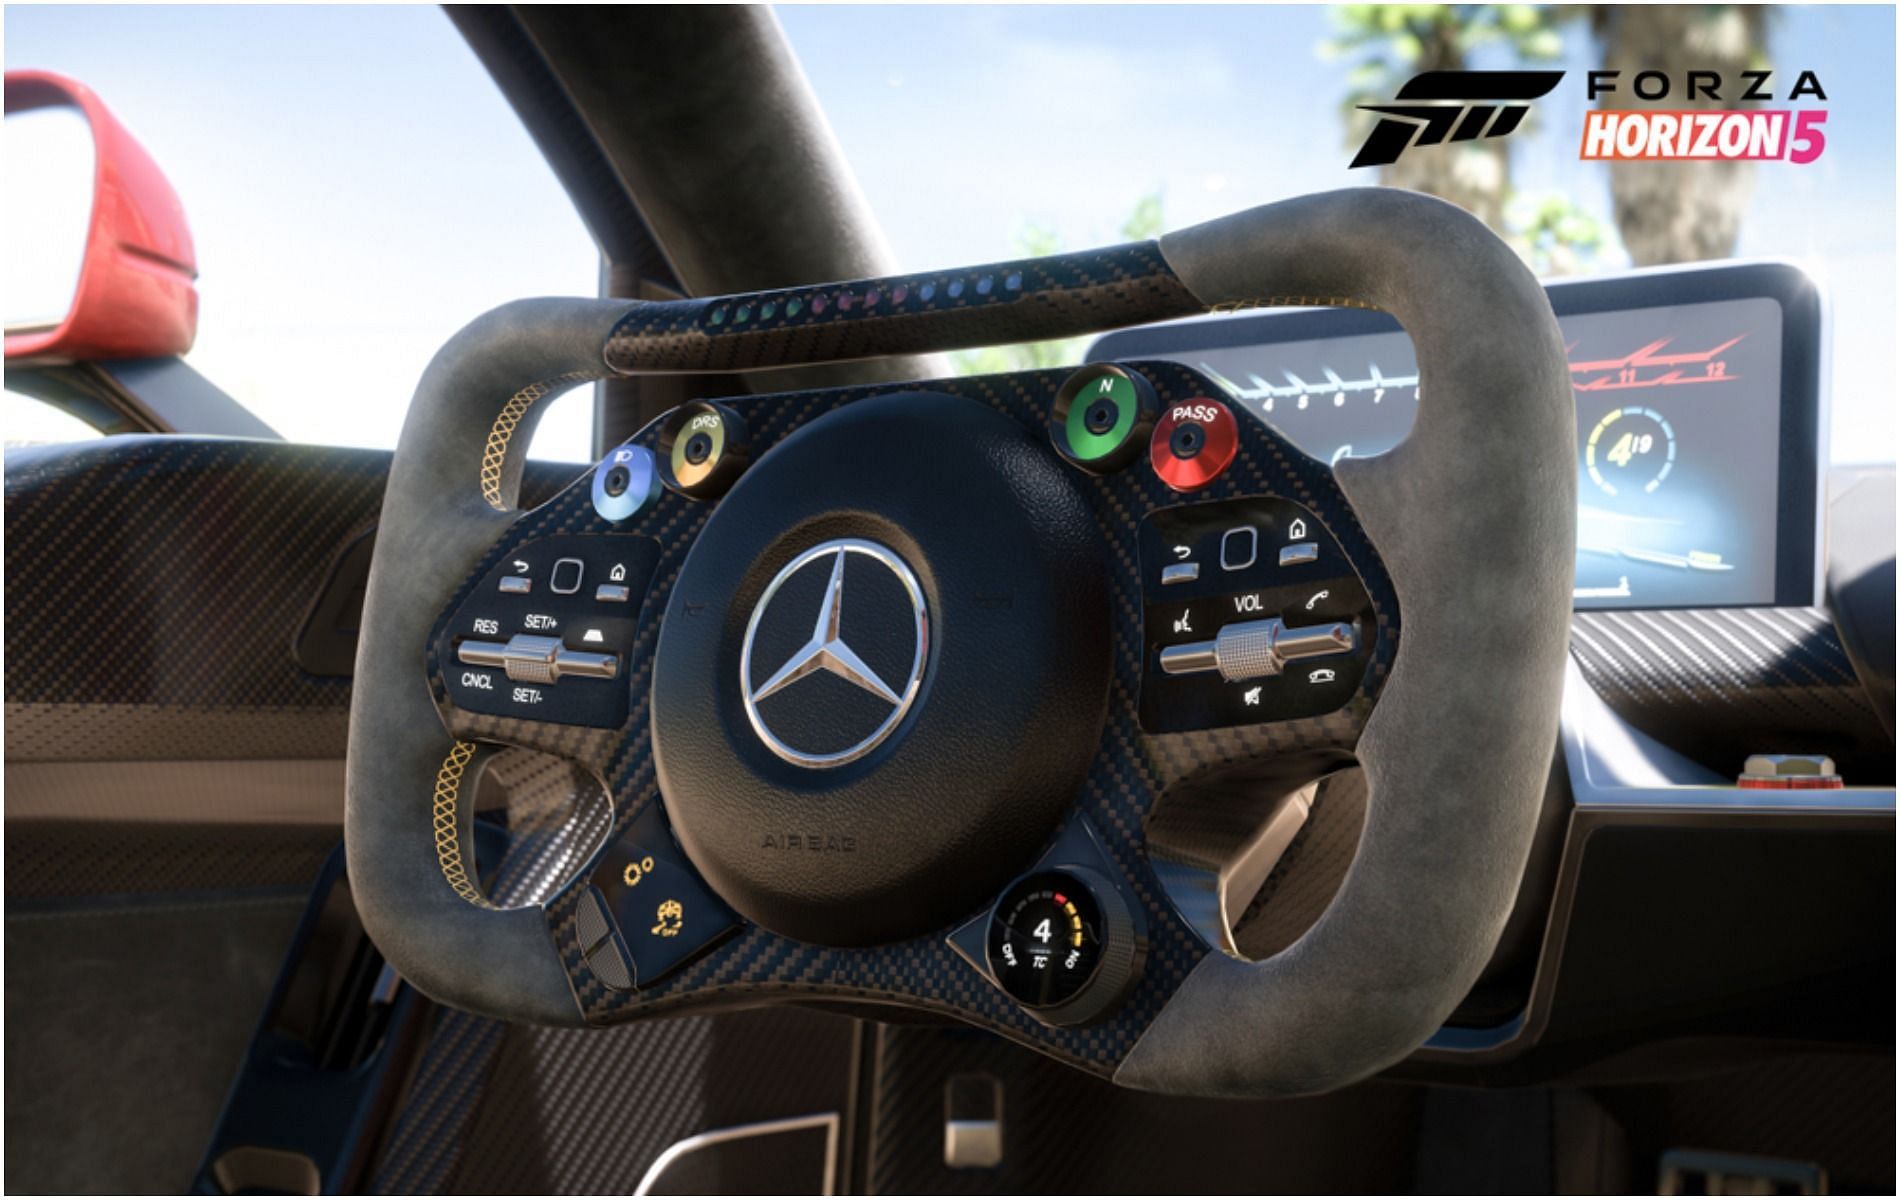 Image via Forza Horizon 5